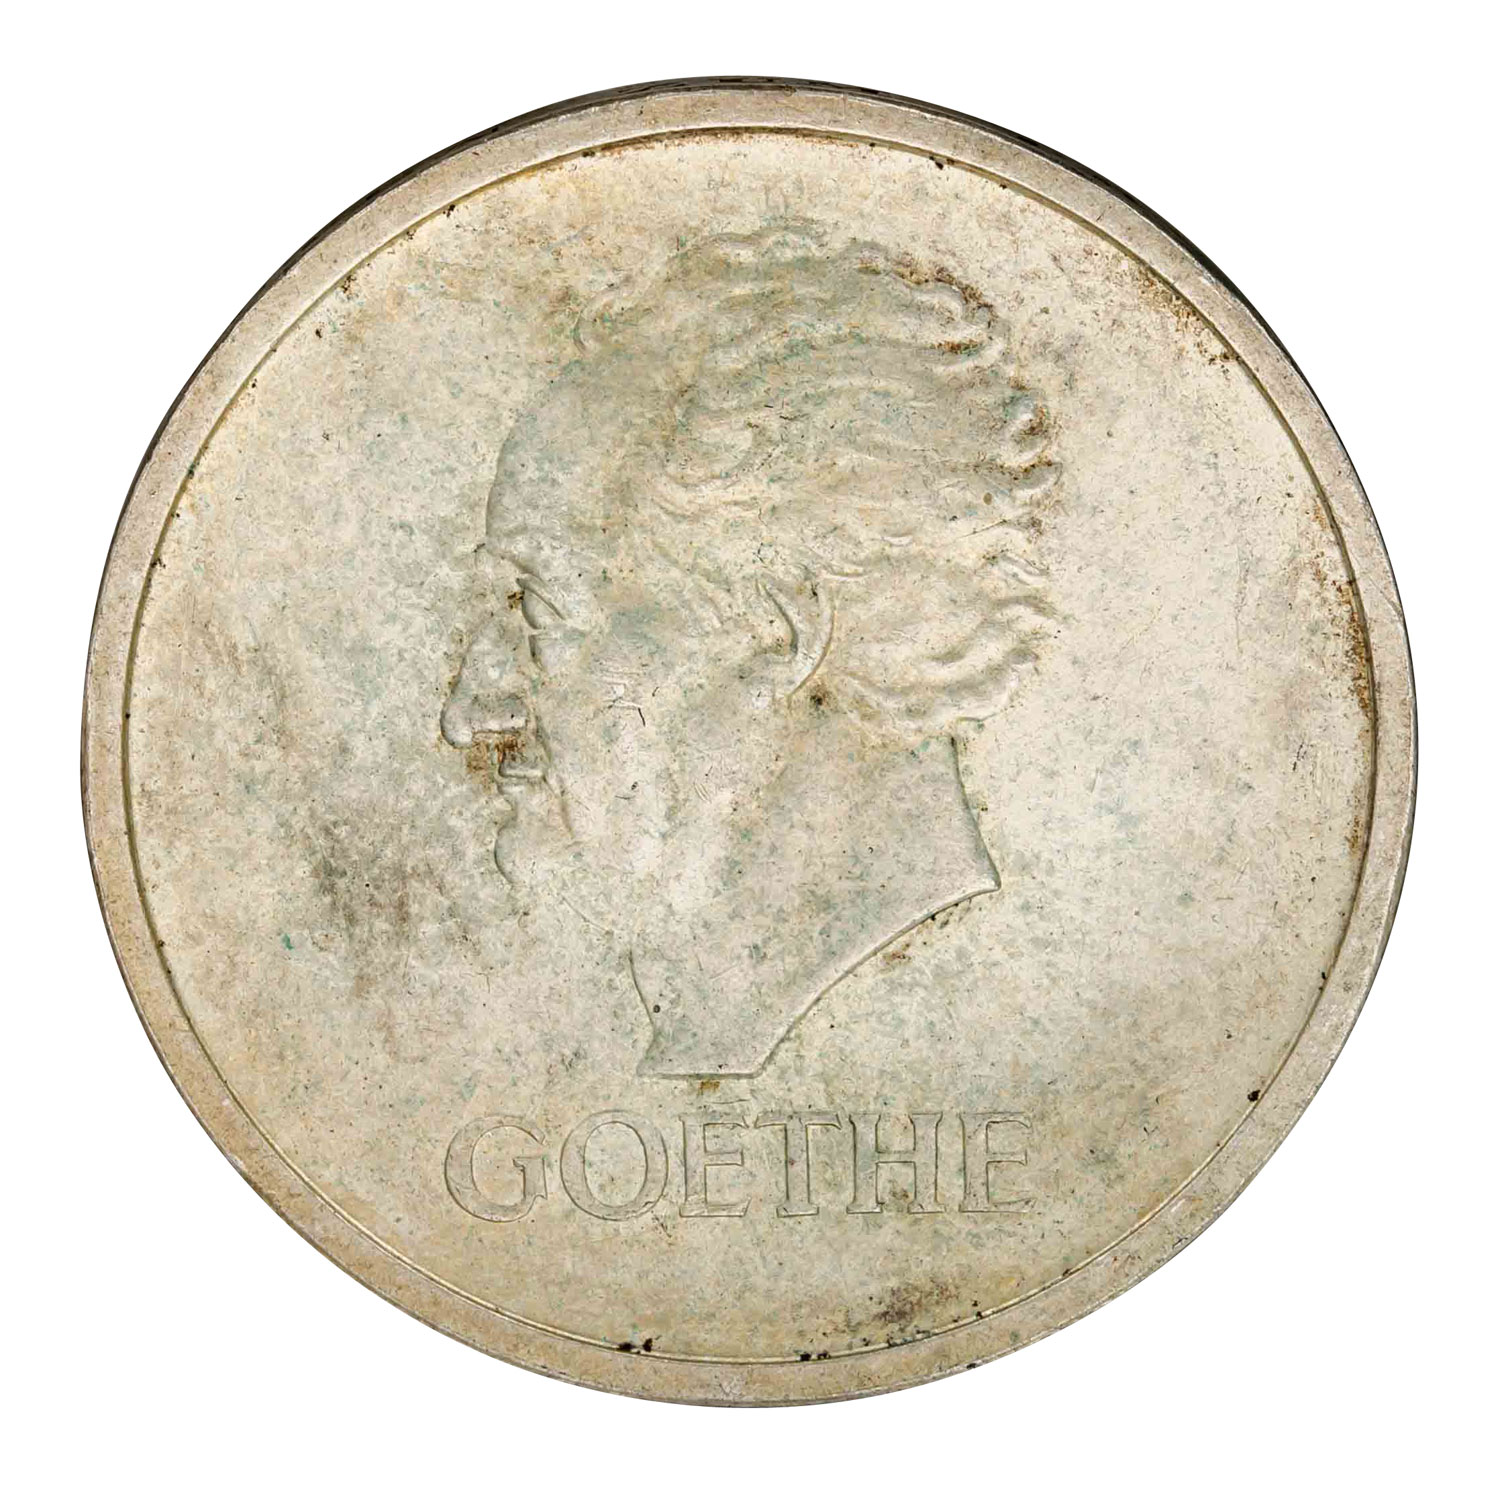 Weimarer Republik/Silber - 5 Reichsmark 1932/J, 100.Todestag Goethes, - Image 2 of 3